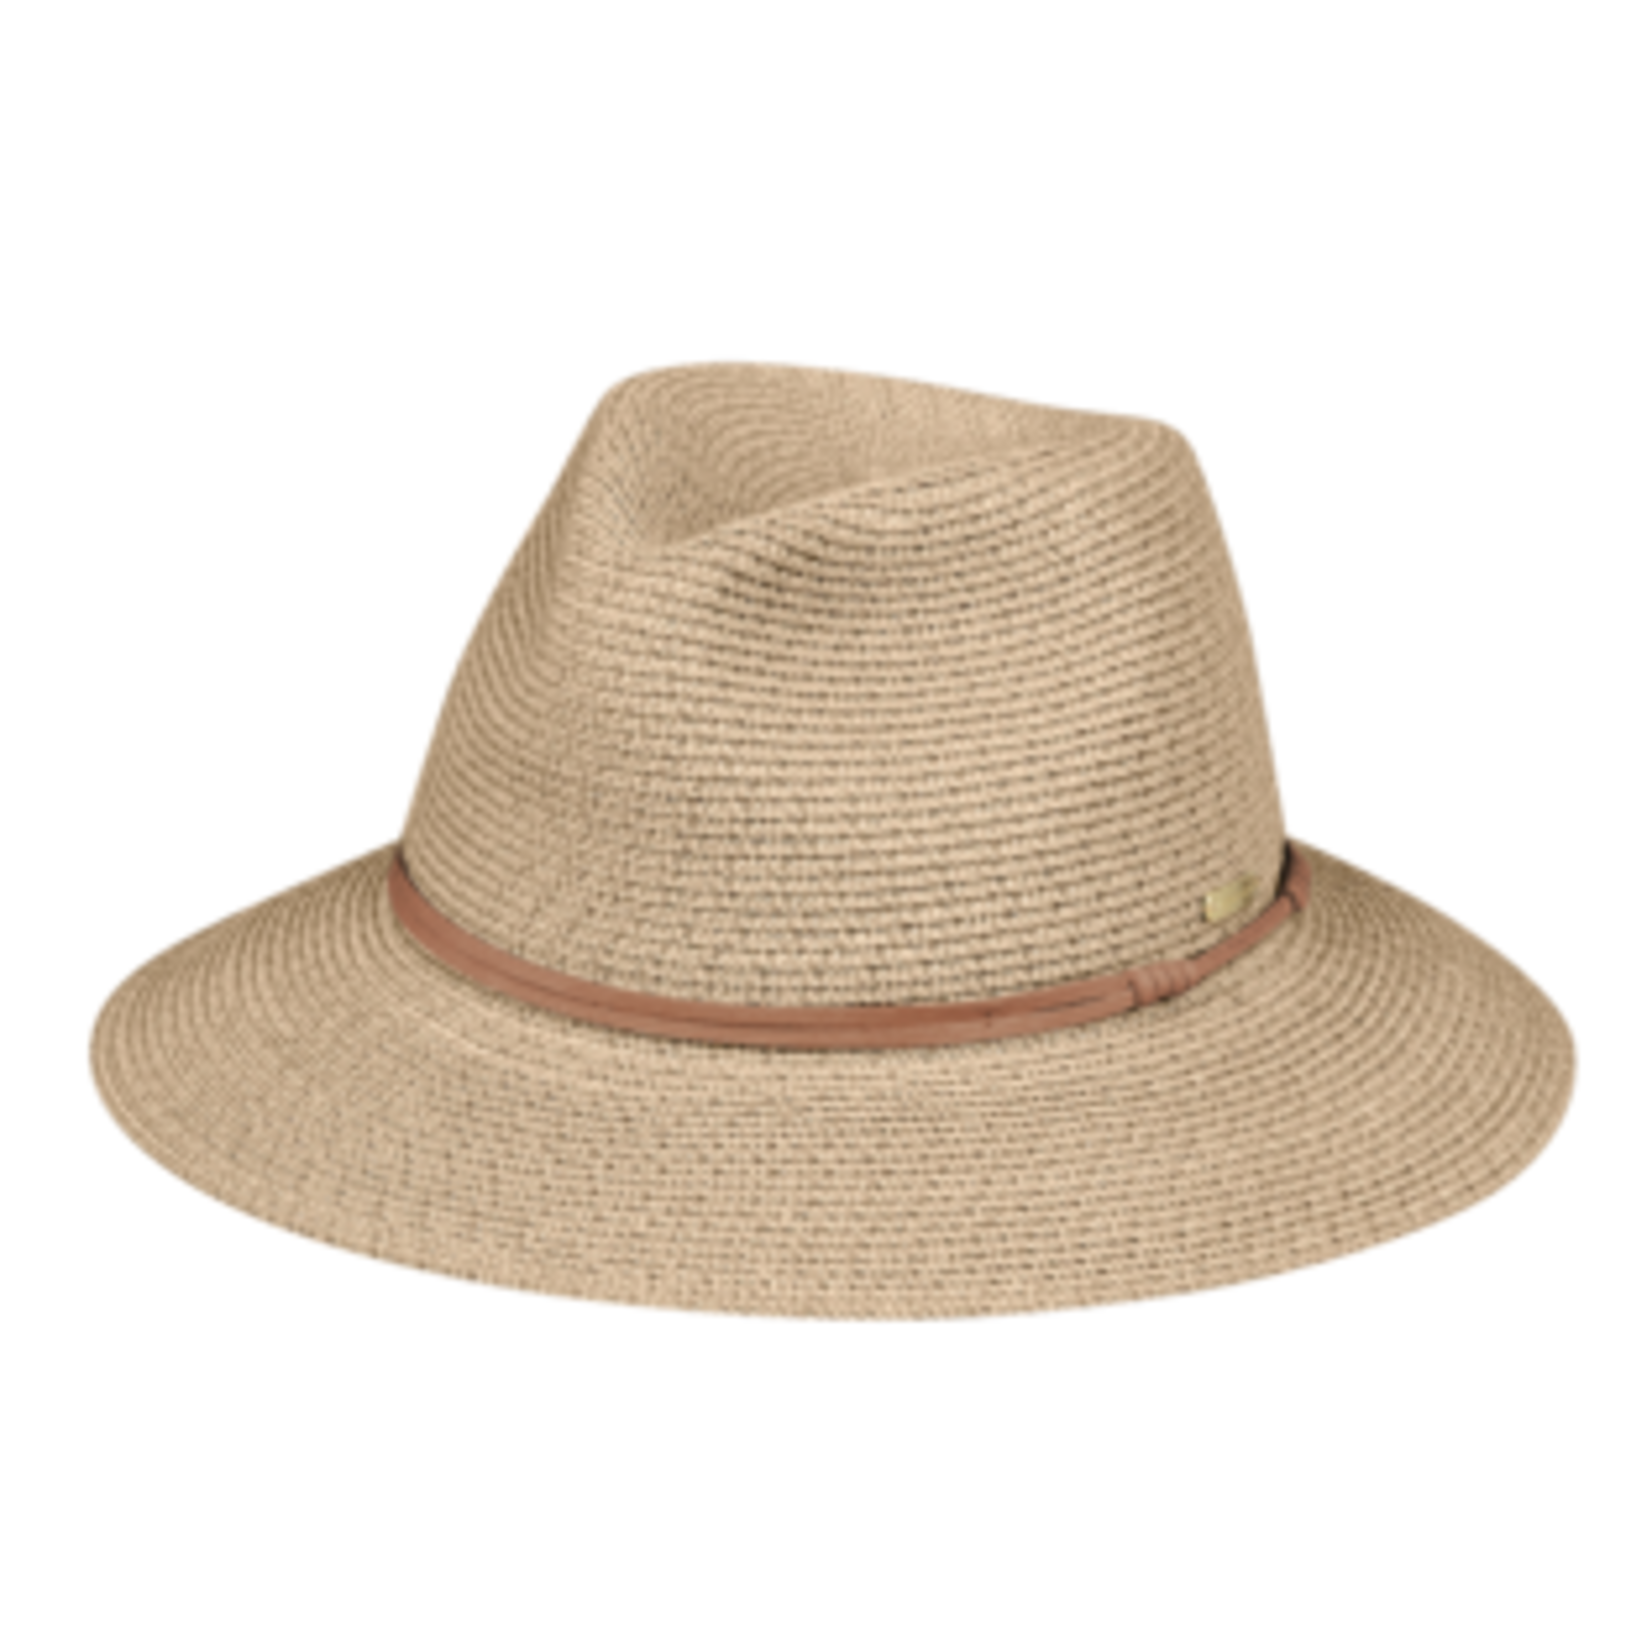 Splashproof Natural Safari Hat - Canwell